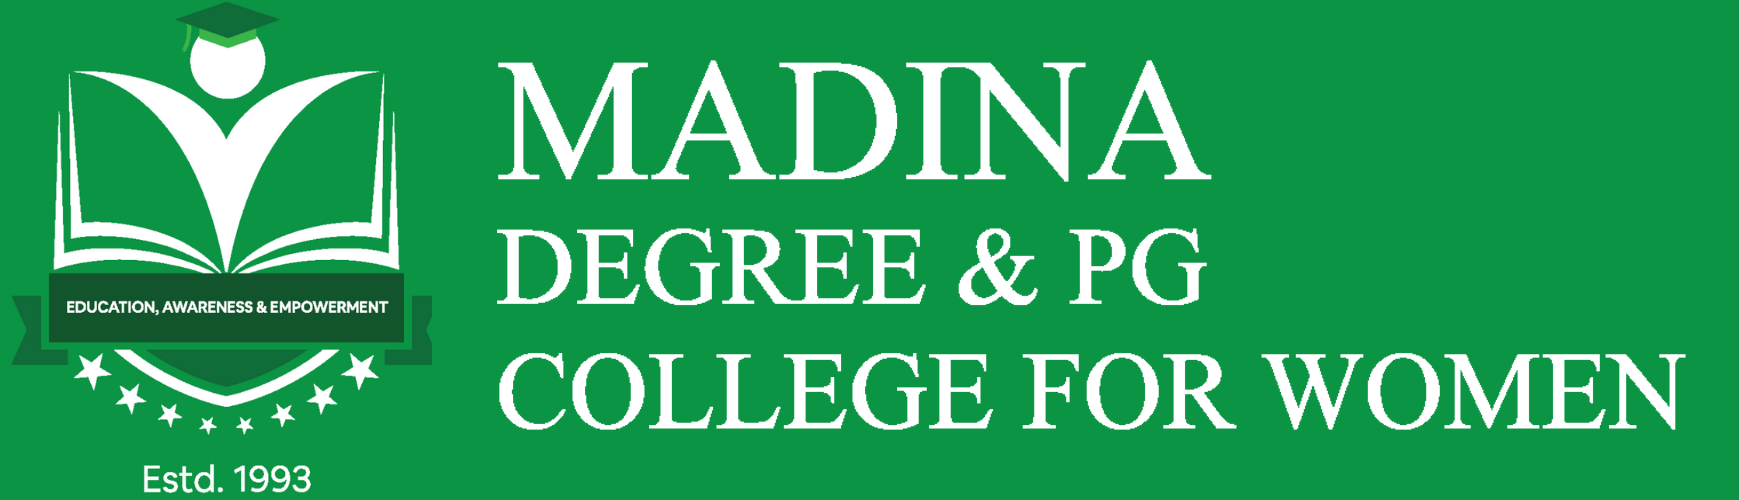 Madina Degree College